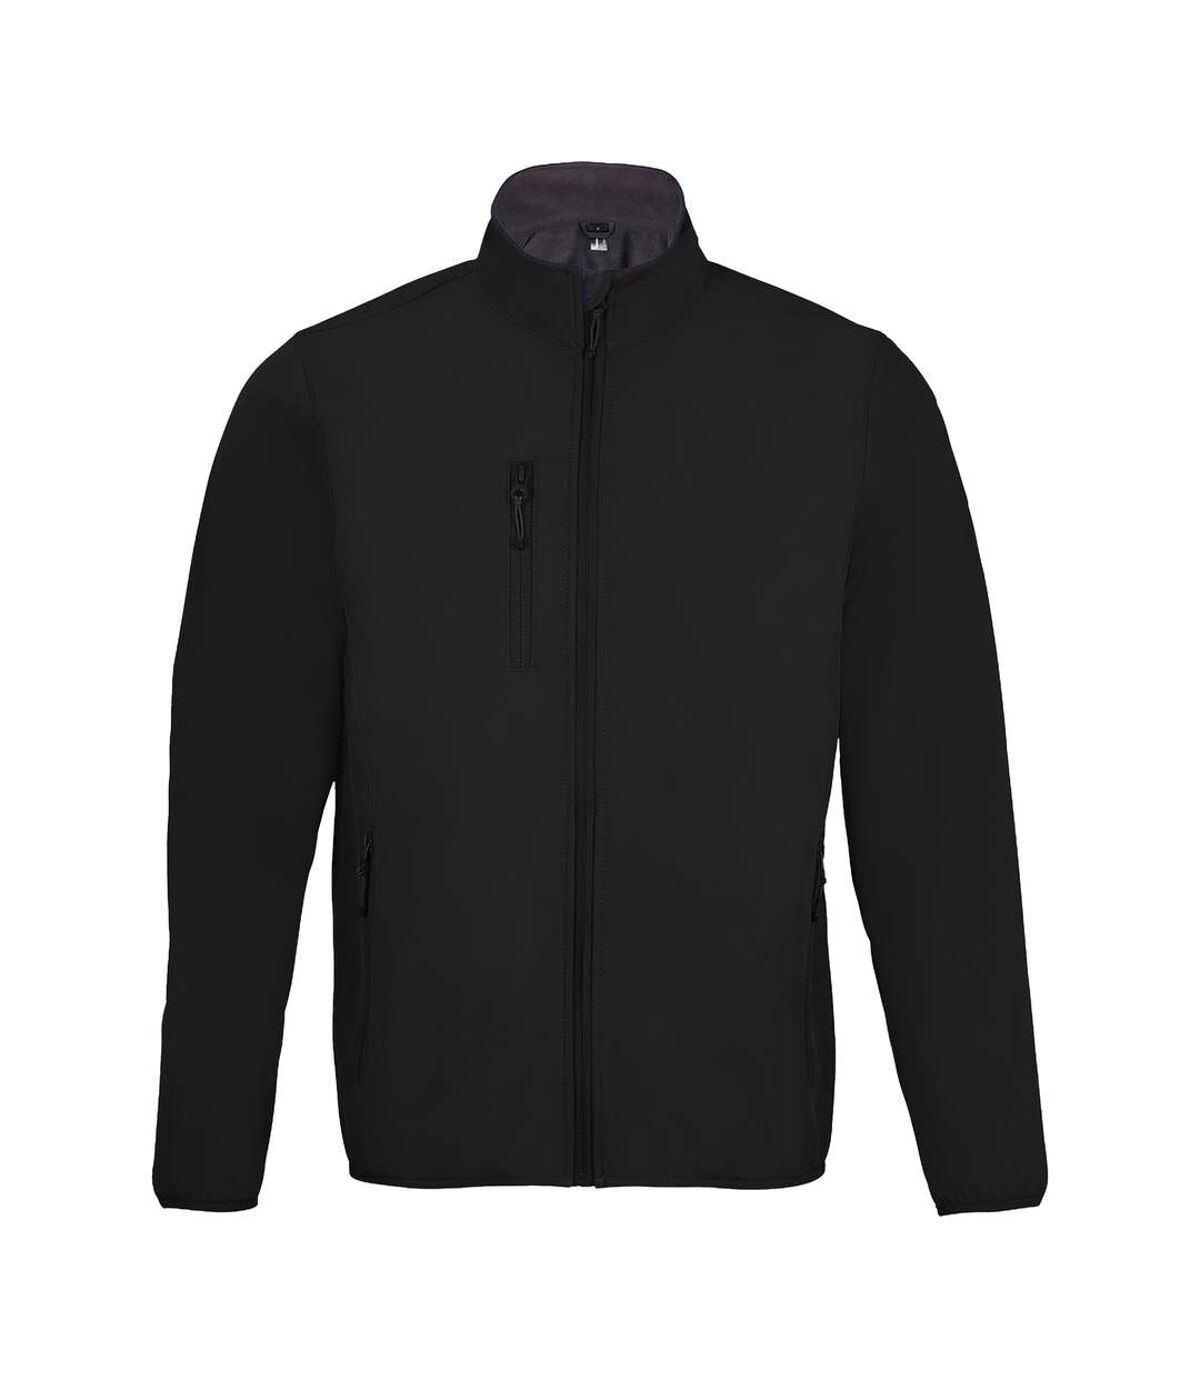 SOLS Mens Radian Soft Shell Jacket (Black) - UTPC4115